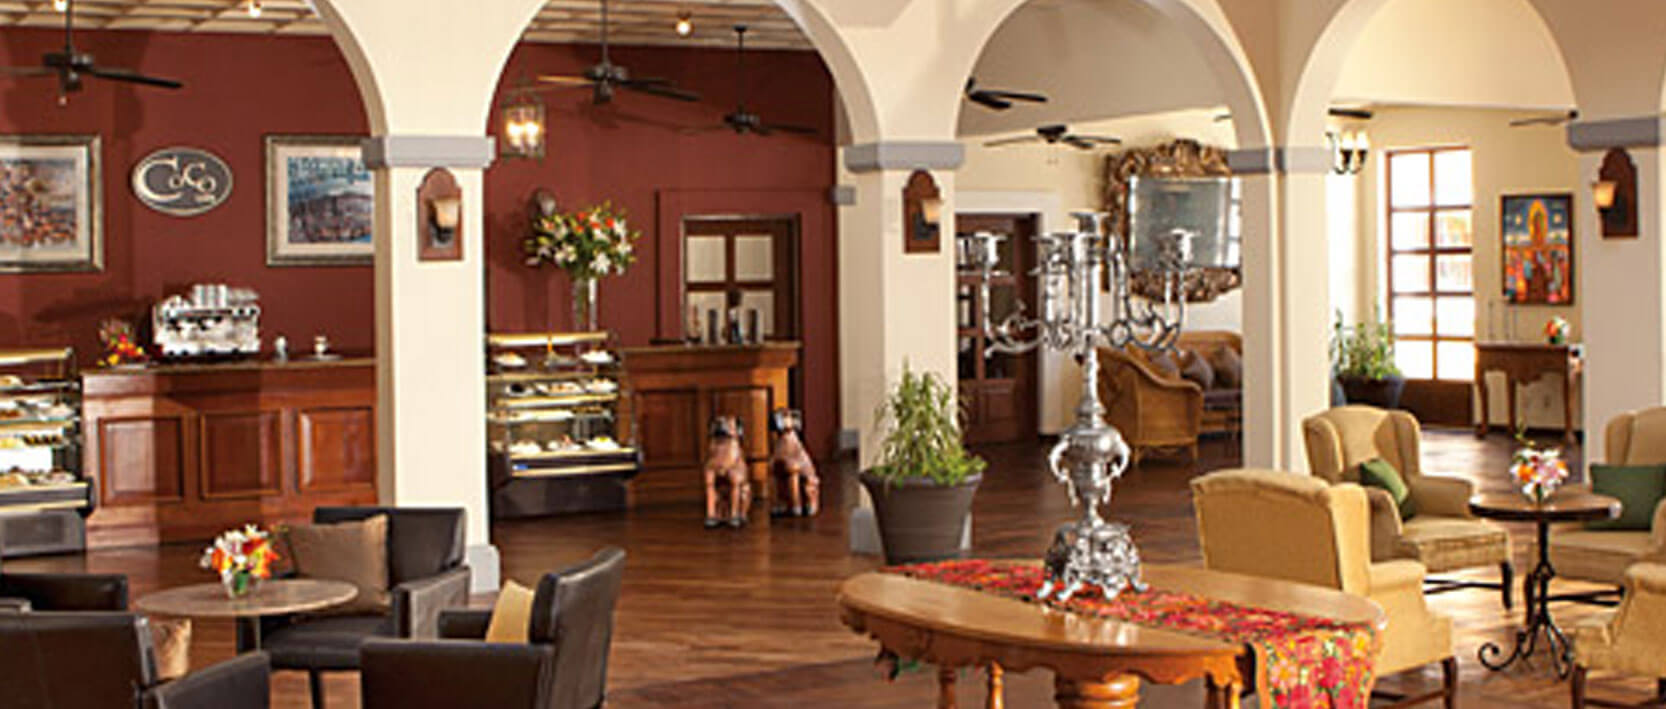 Dreams Tulum Resort Restaurants and Bars - Coco Cafe